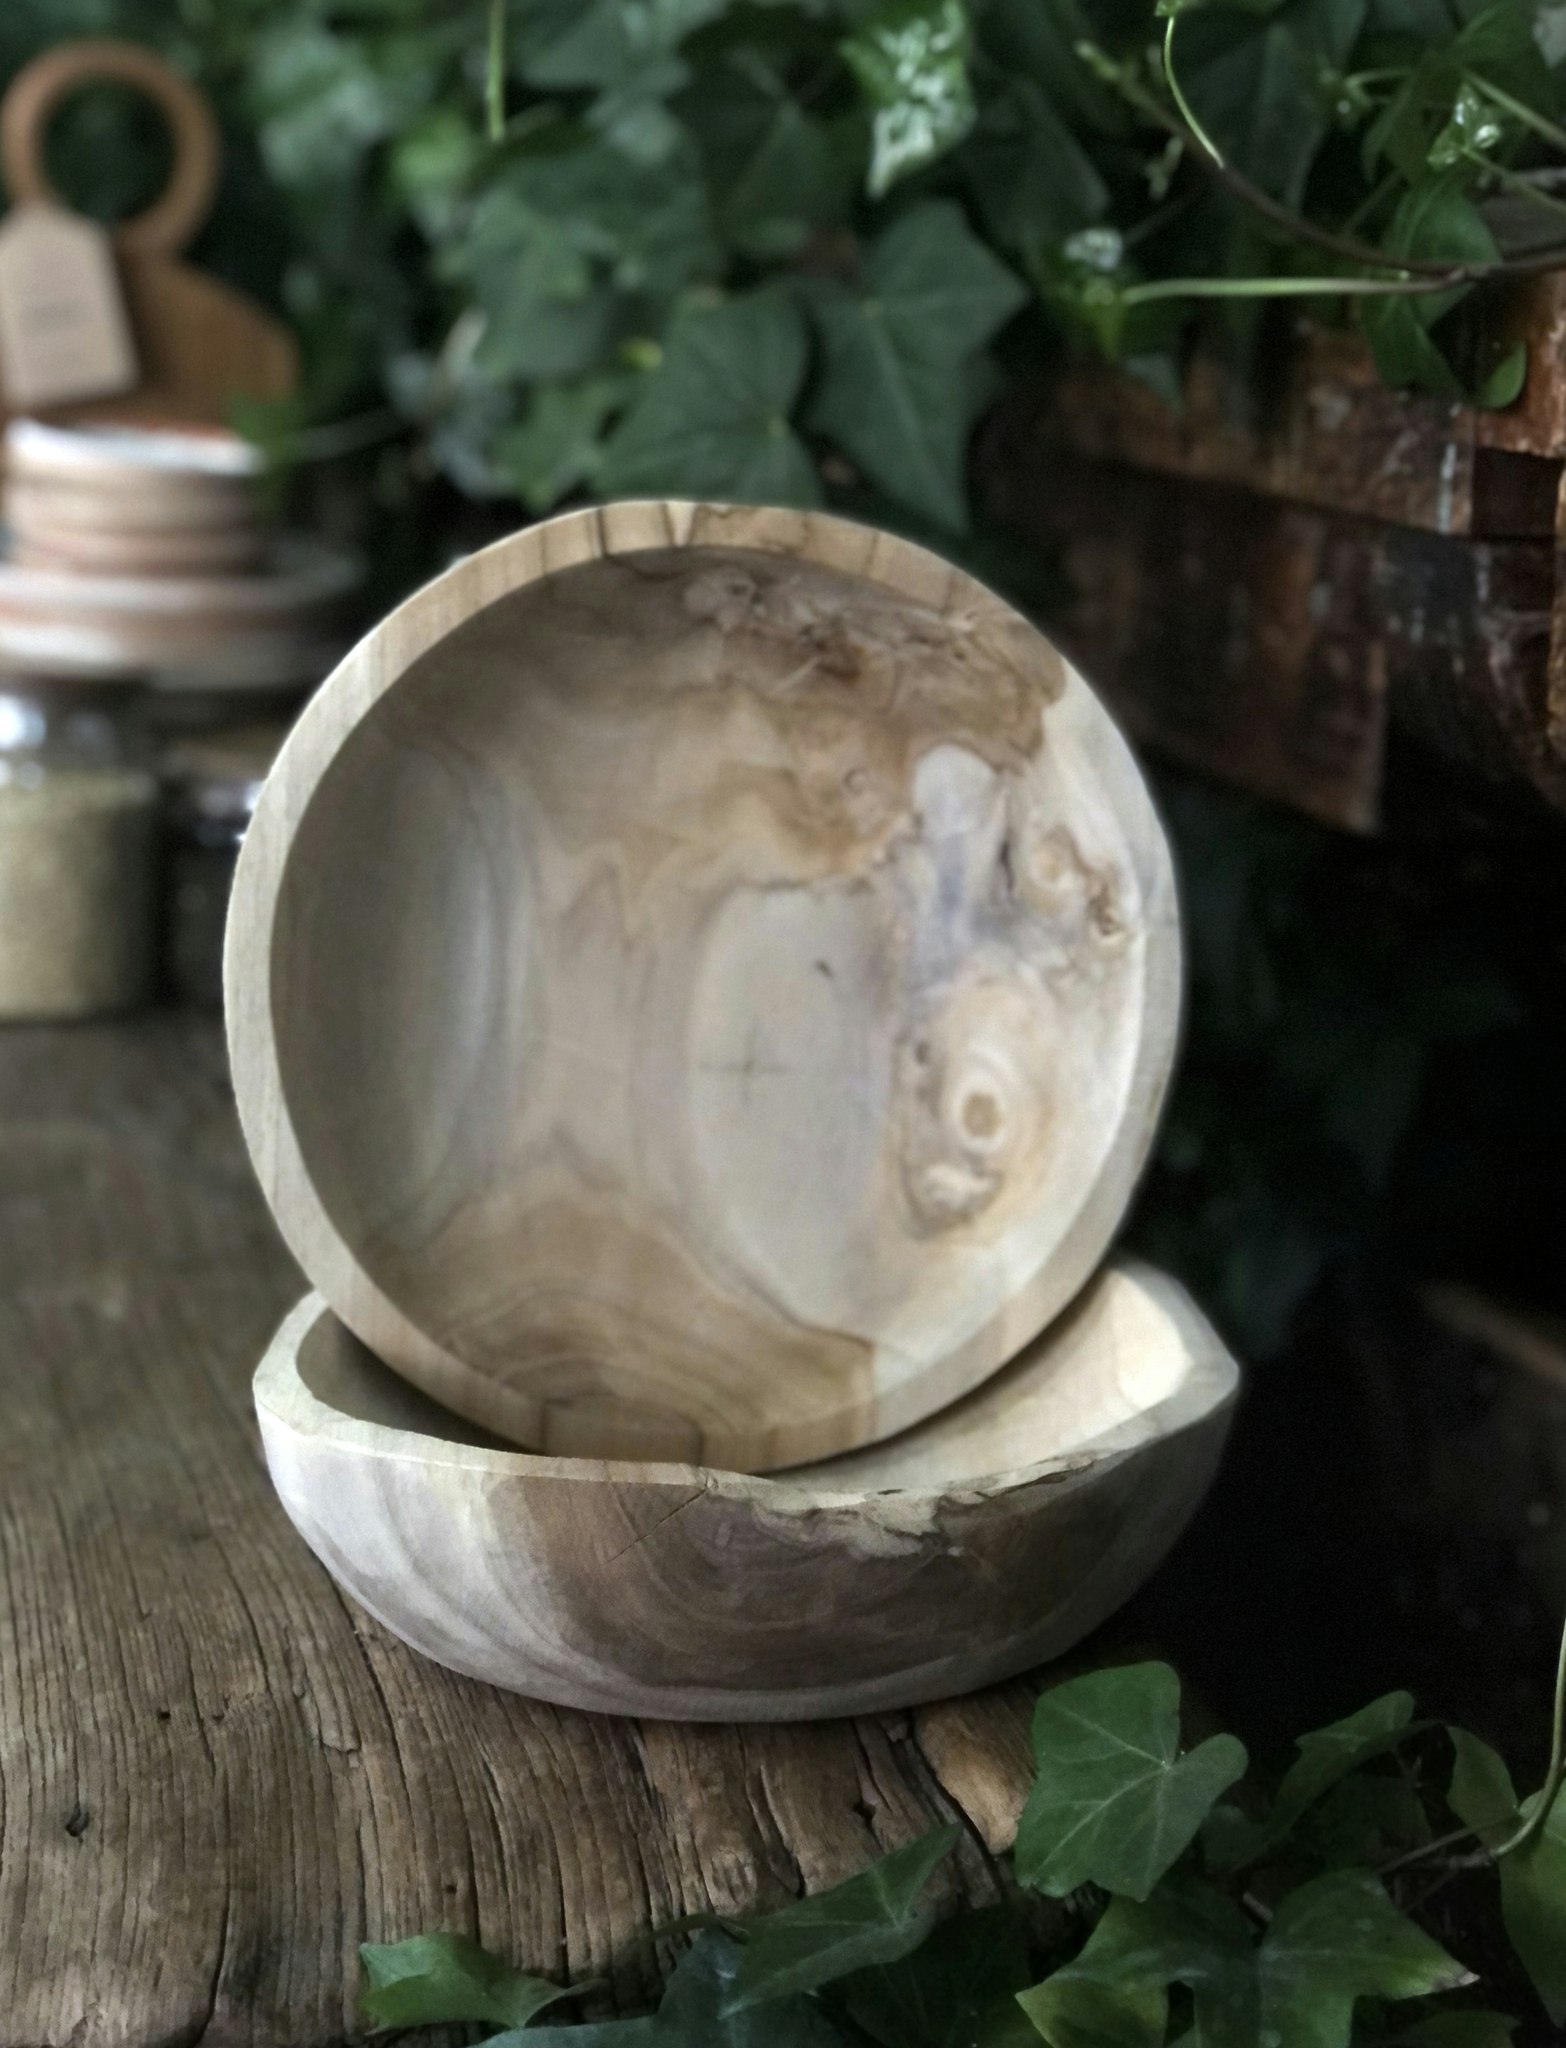 Handmade wooden bowl